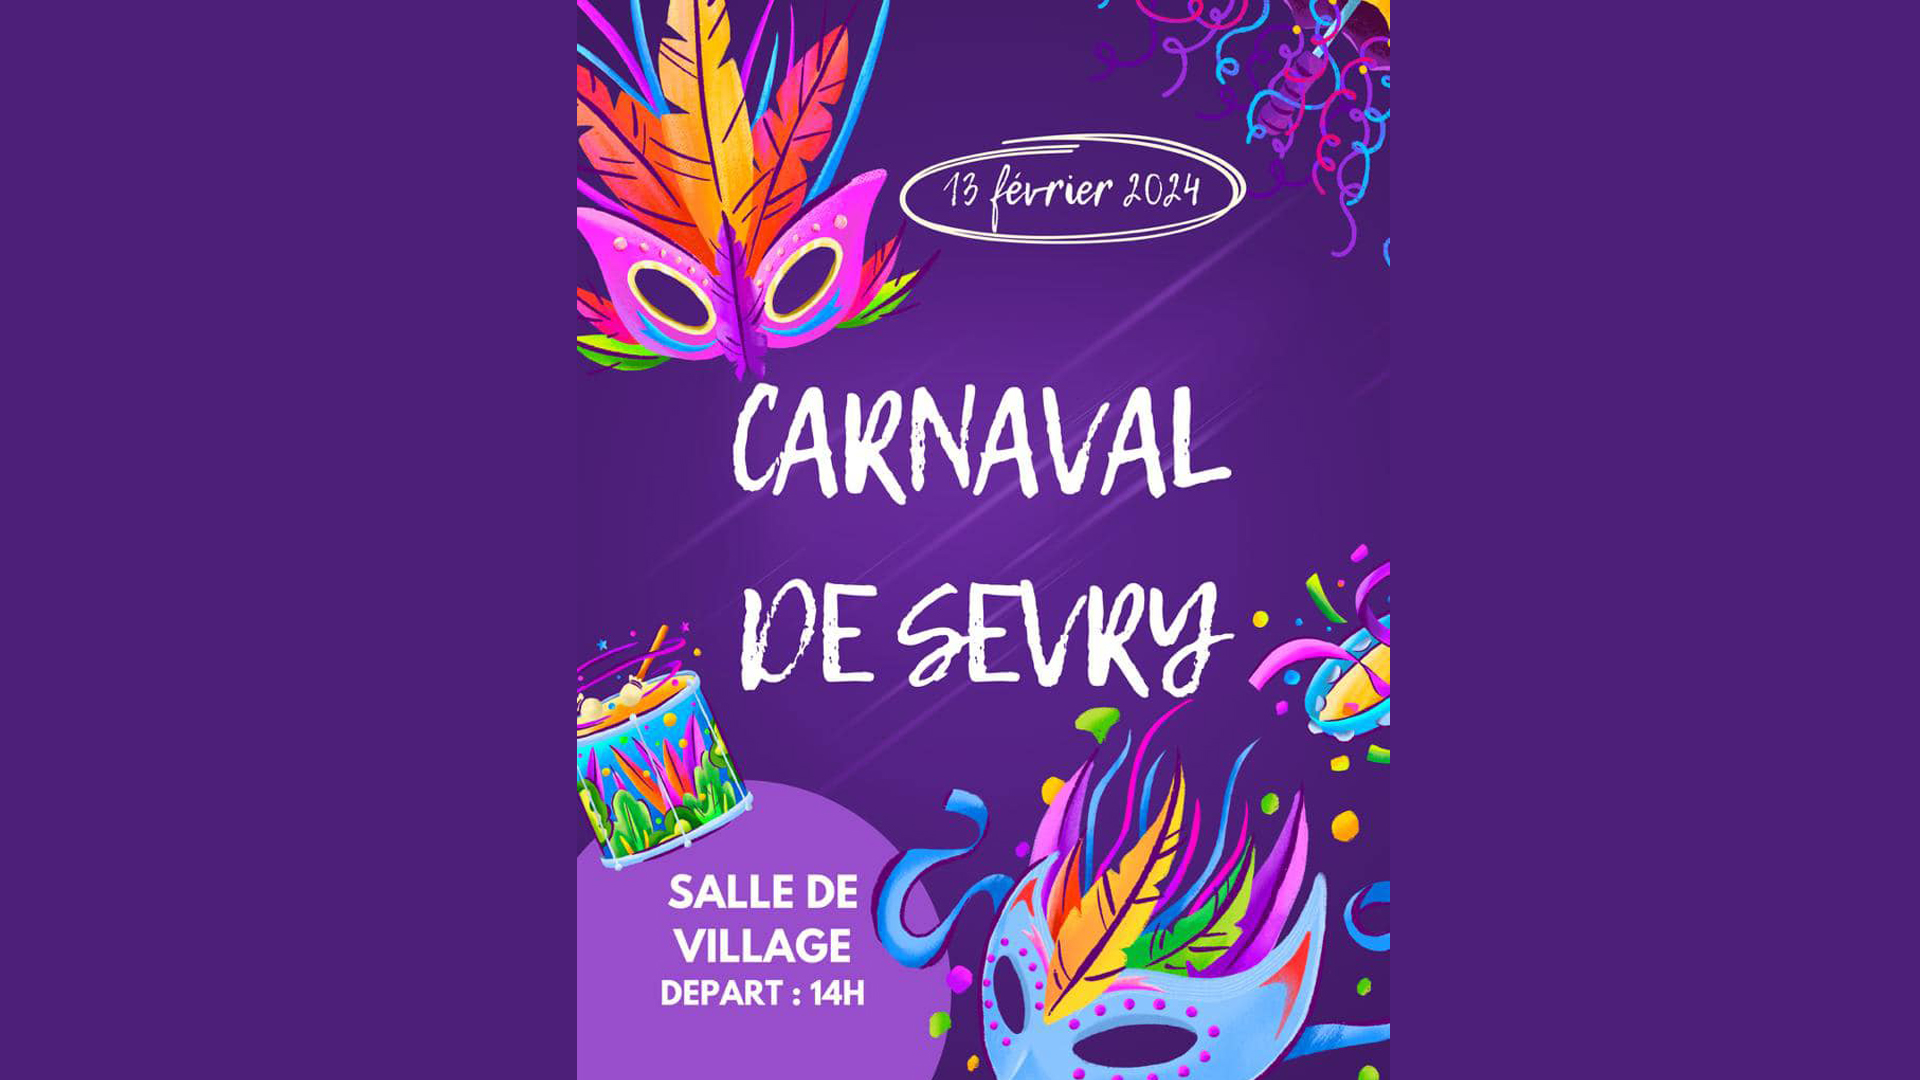 Carnaval de Sevry